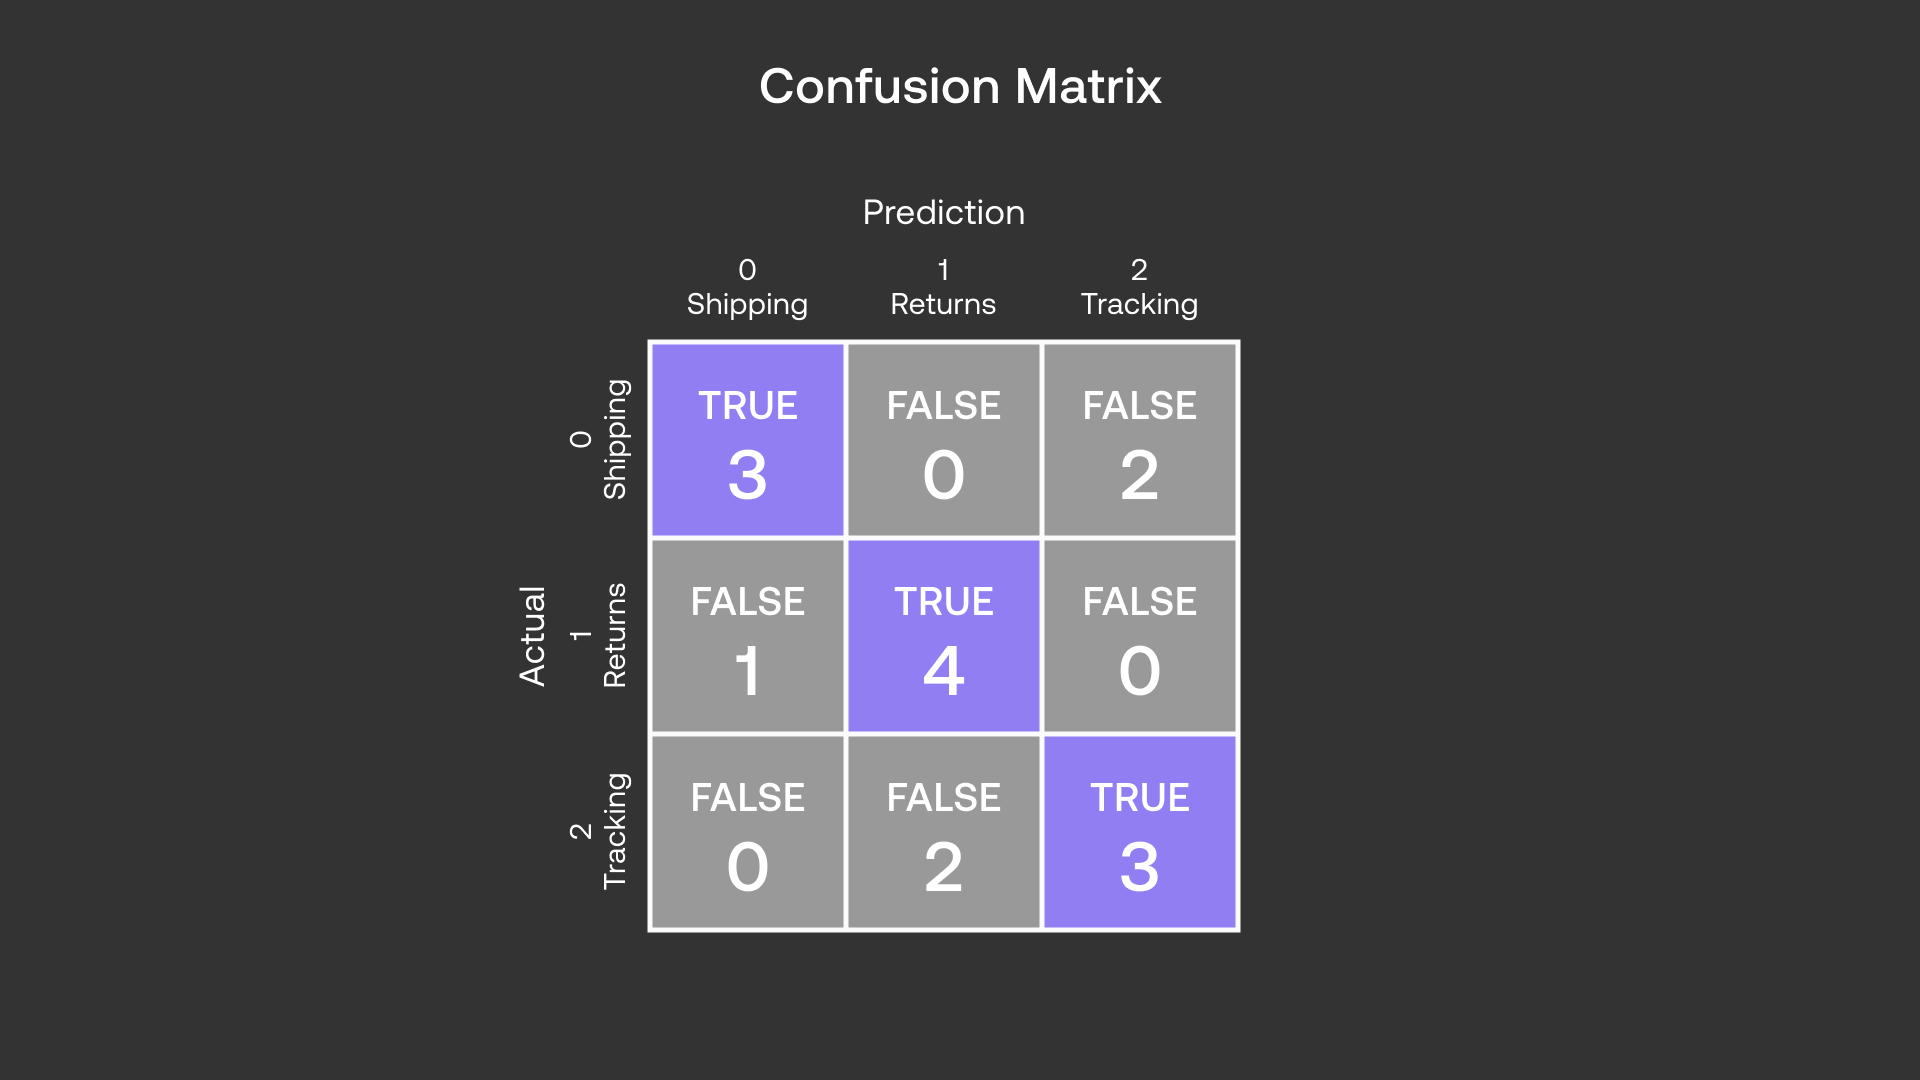 Populating the classification outcome in the Confusion Matrix